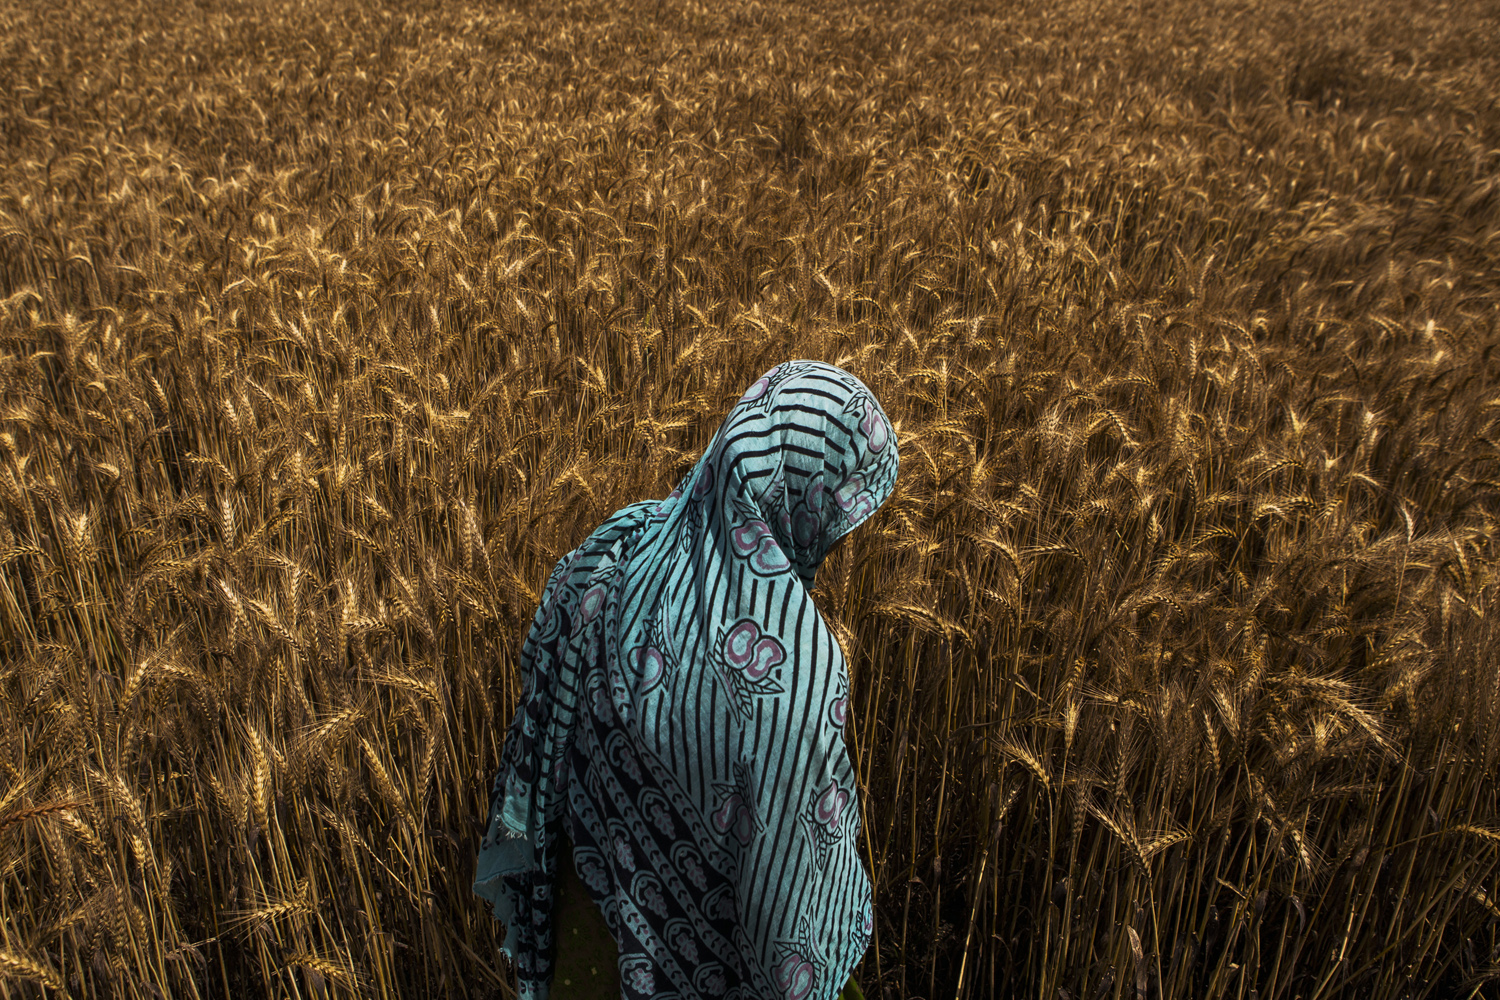 Apr. 7, 2014. A farm worker walks through a wheat field during a crop harvest in Panipat, Haryana, India.